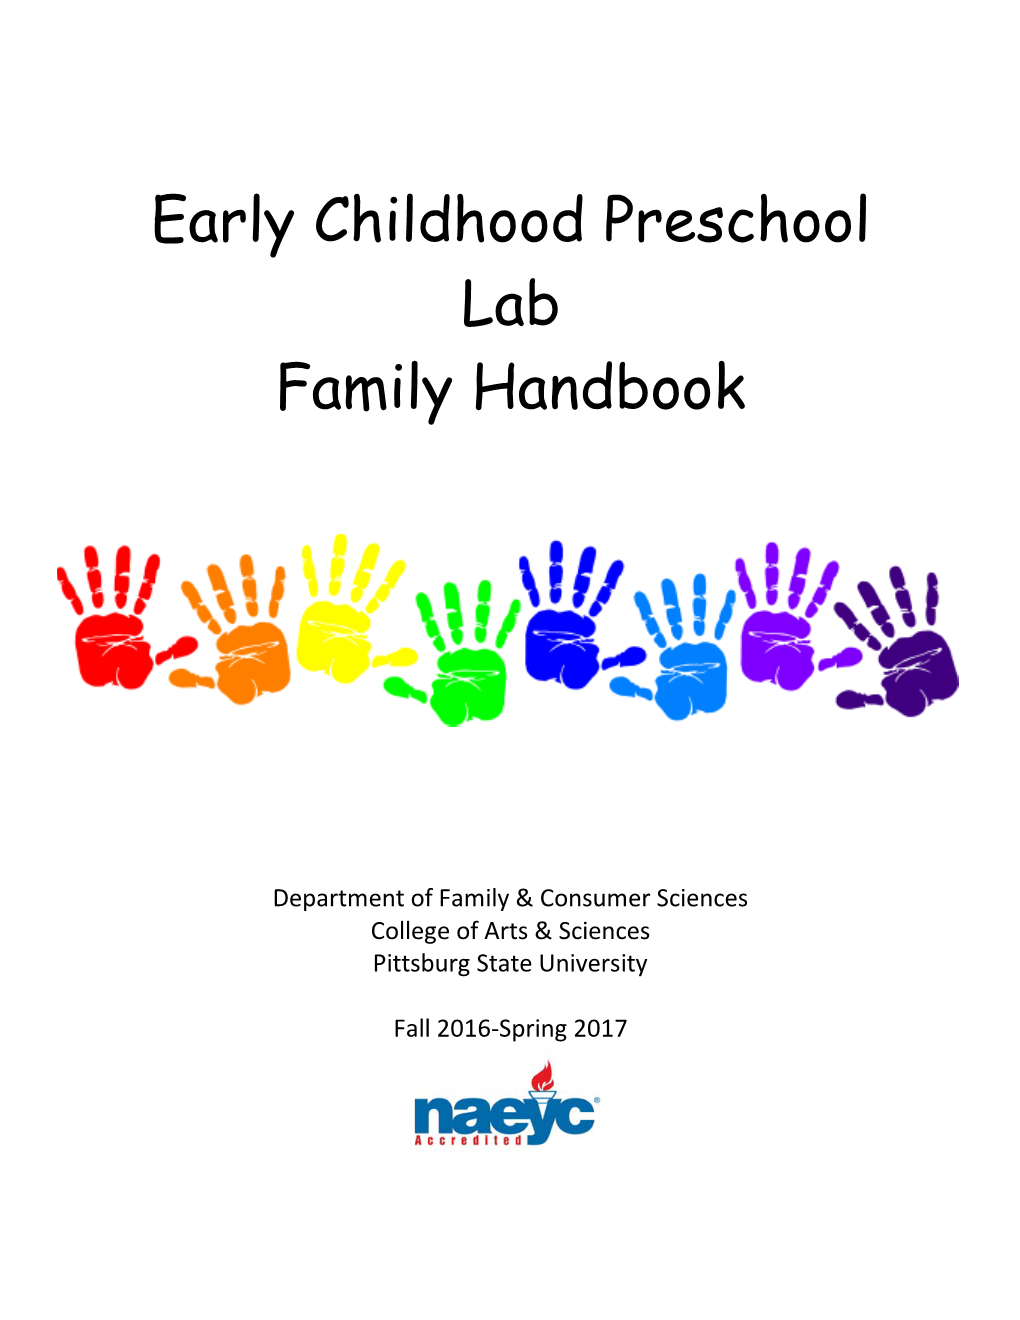 Early Childhood Preschool Lab Family Handbook